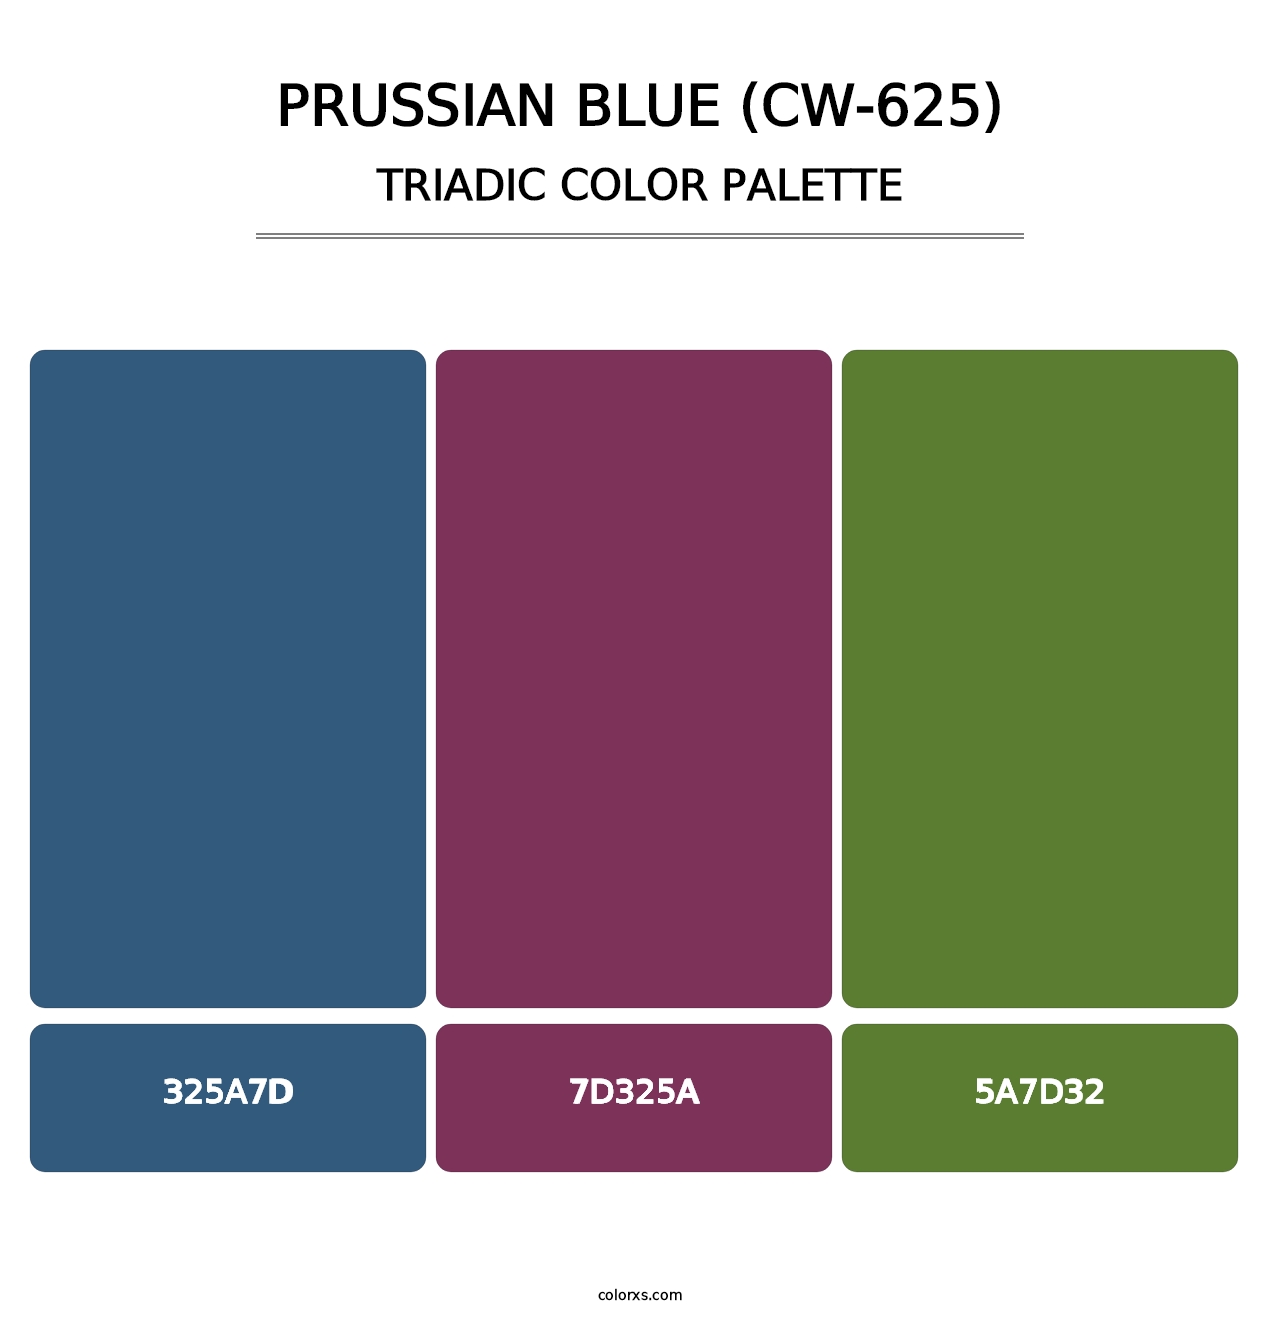 Prussian Blue (CW-625) - Triadic Color Palette